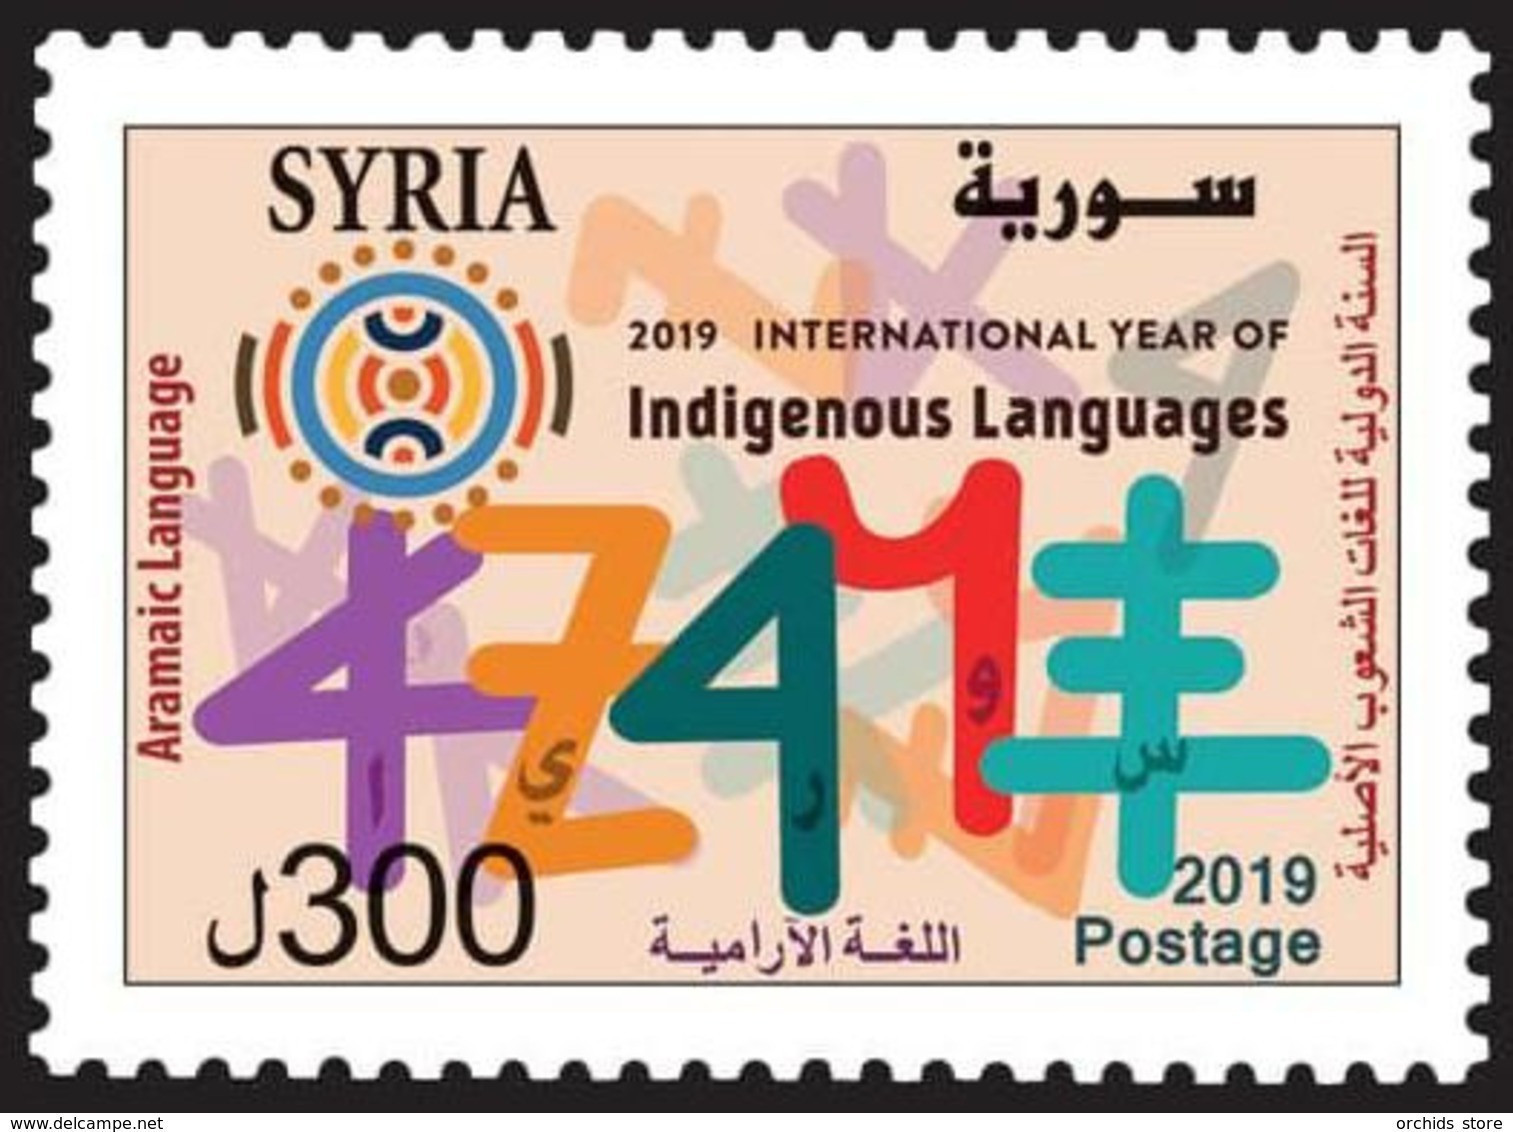 Syria 2019 NEW MNH Stamp - Indigenous Languages - Syria